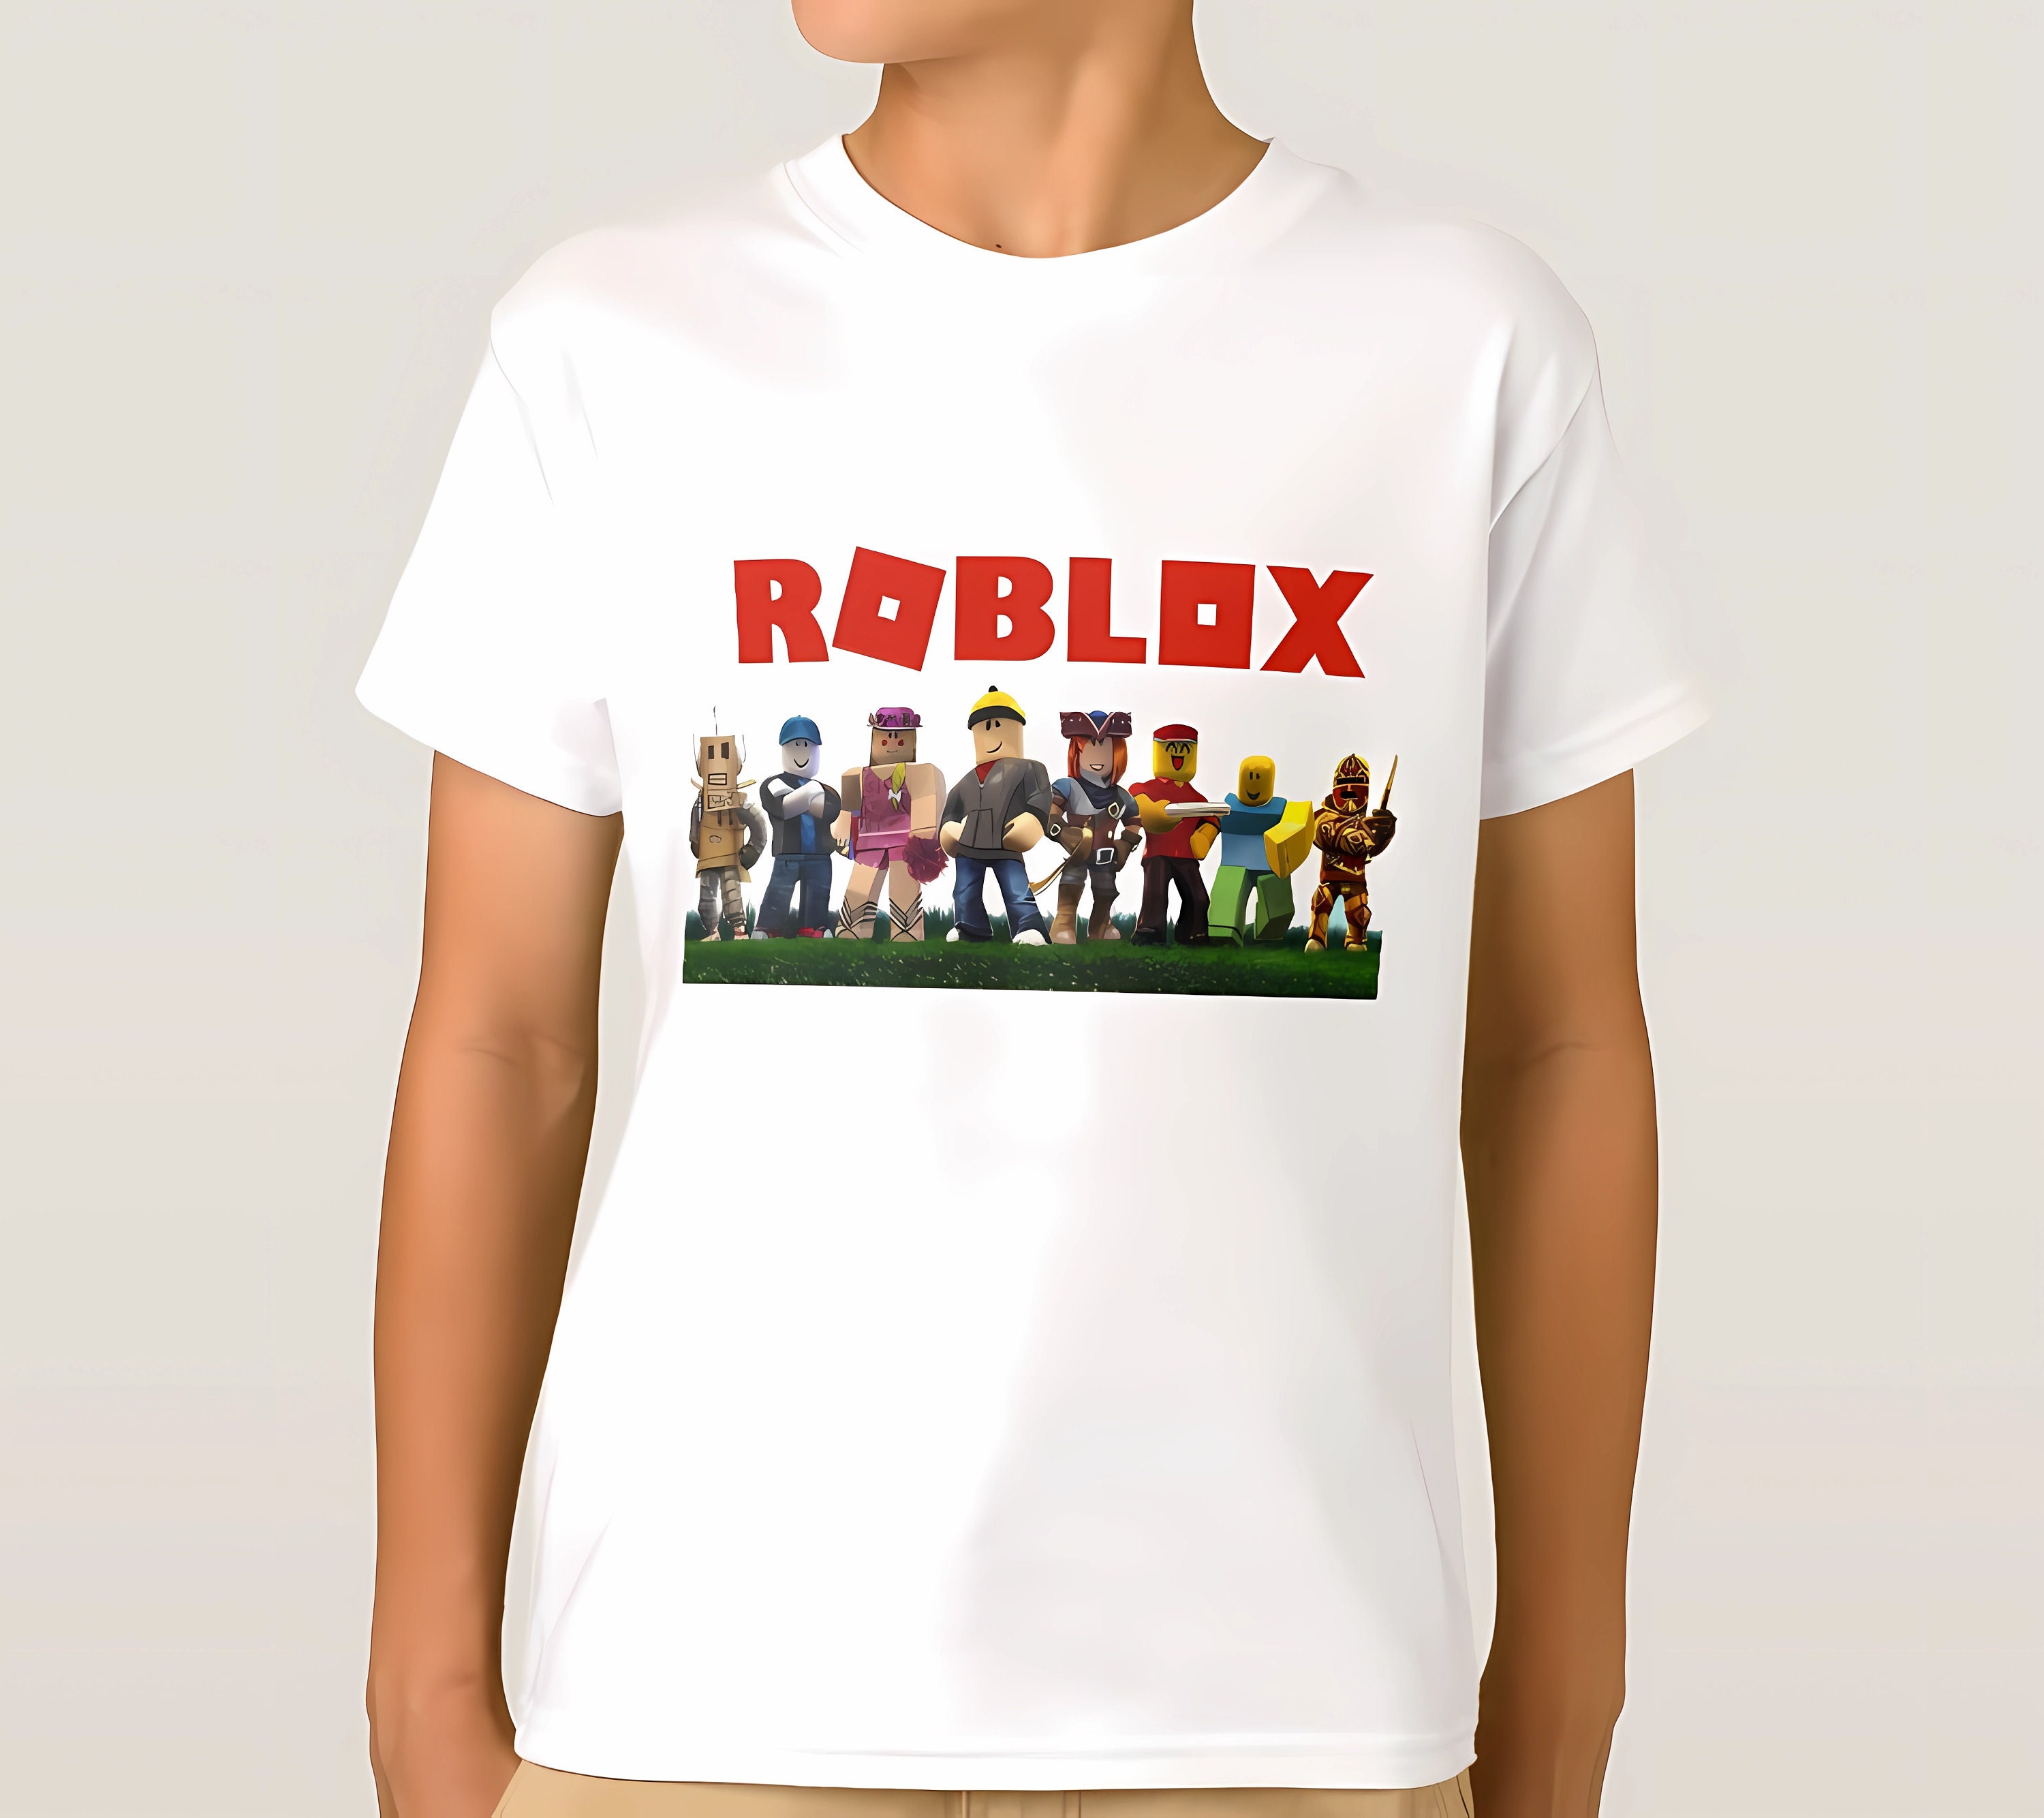 Editable T-shirts design Roblox GirlKids Birthday Printable -  Portugal